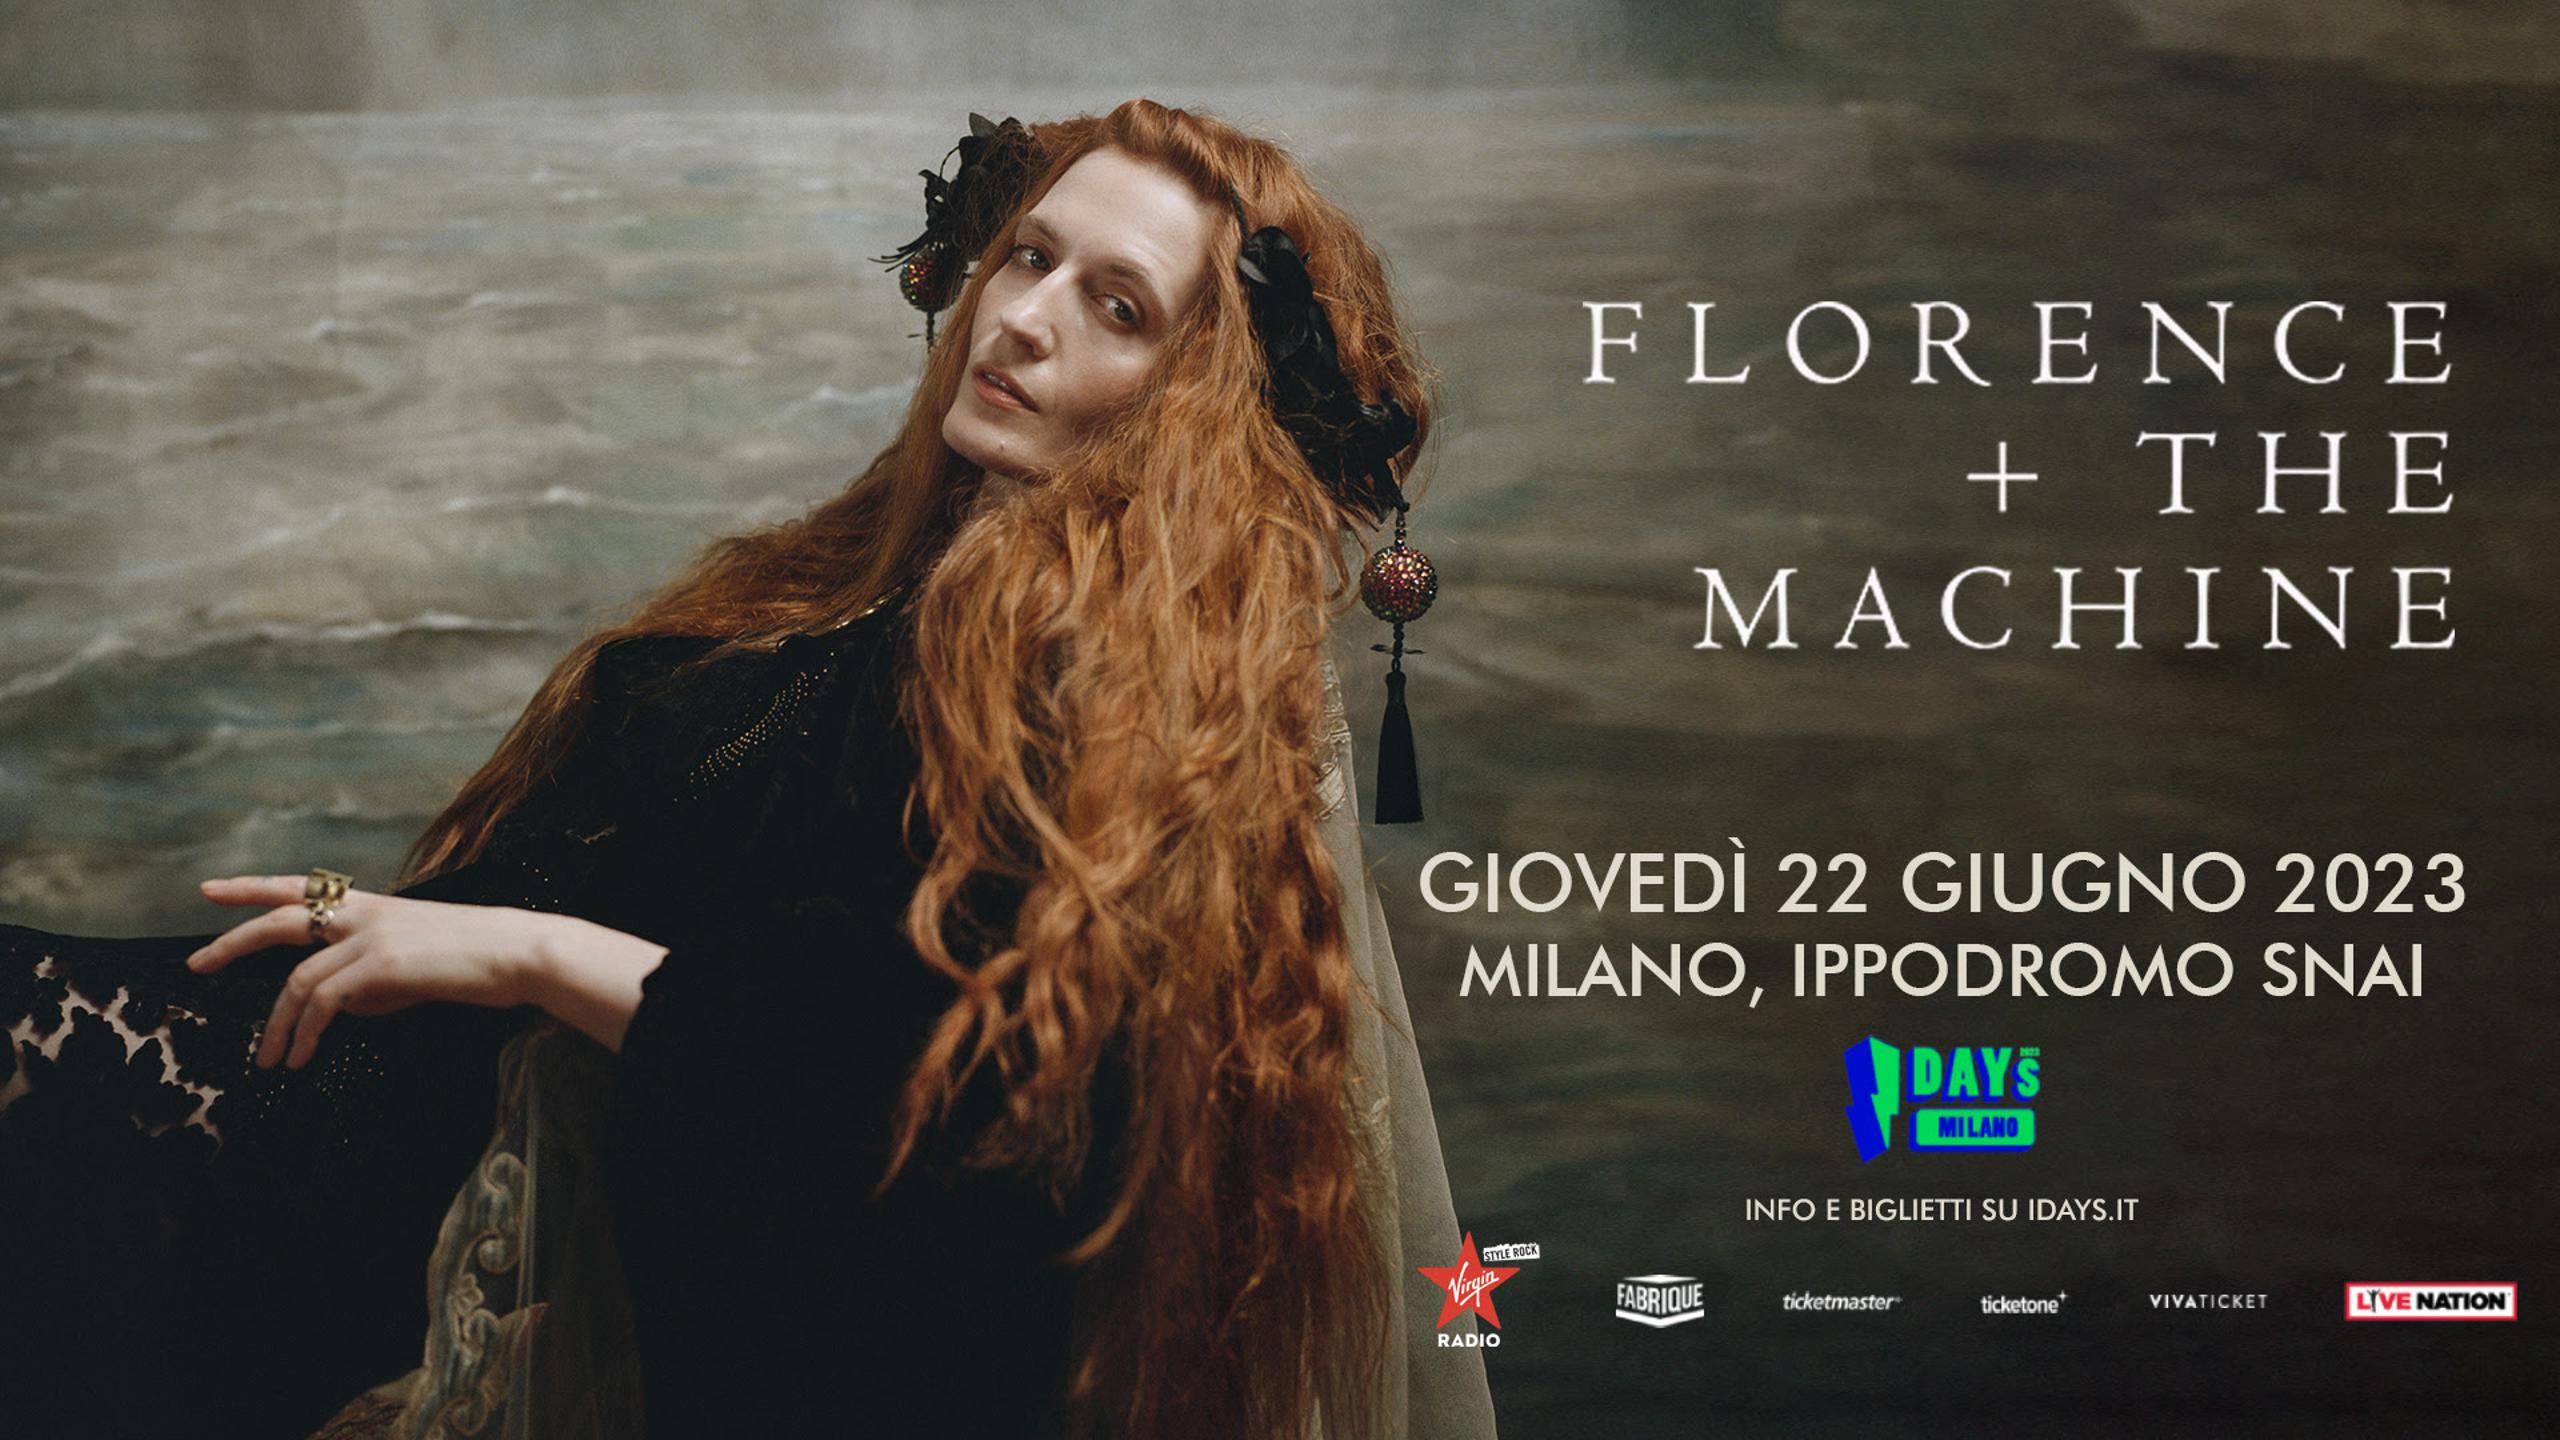 Florence + The Machine concert tickets for Ippodromo del Galoppo di San